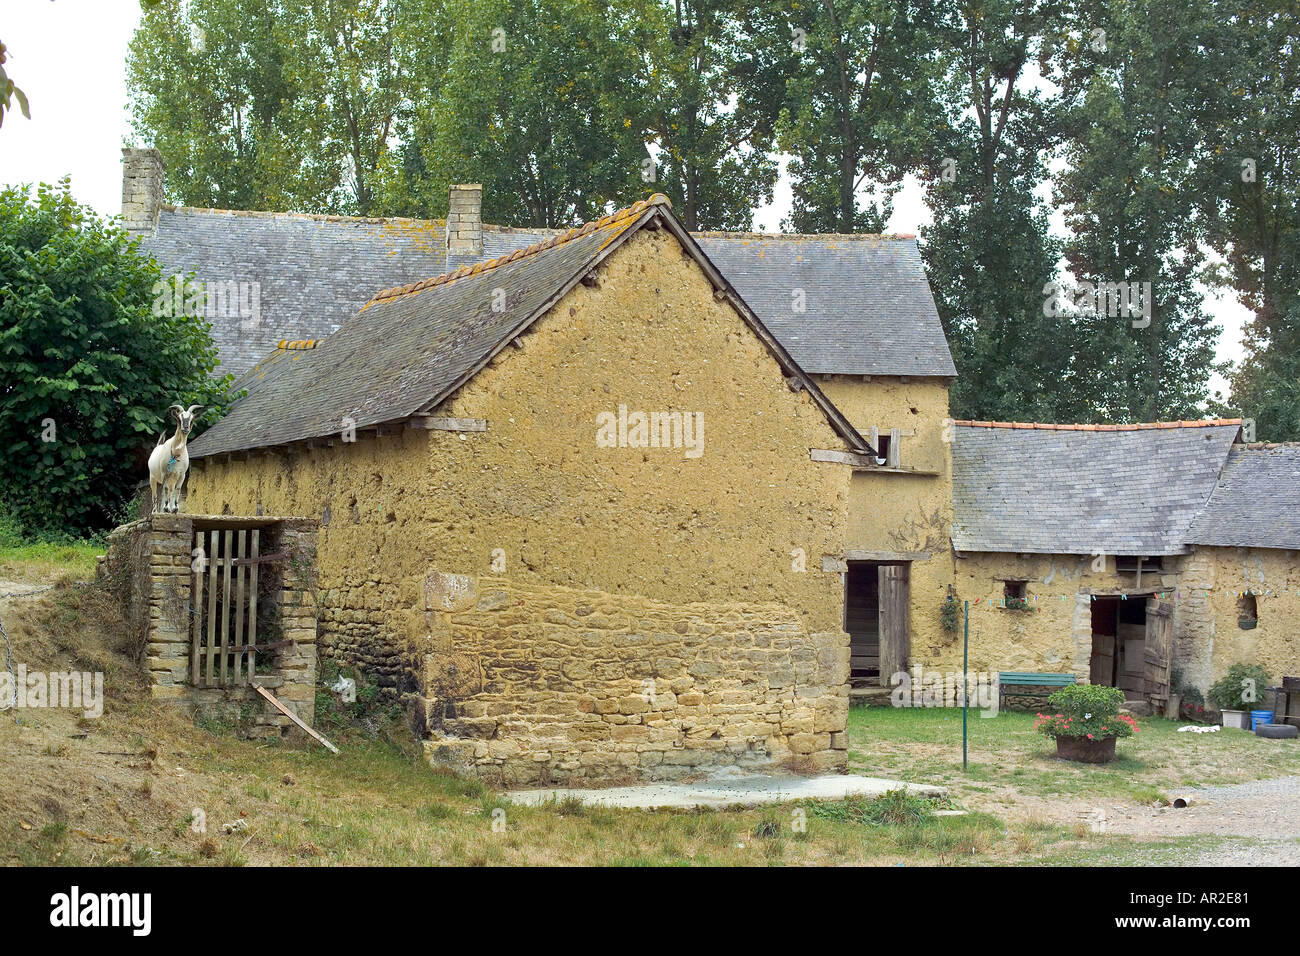 Houses built with earth, "Le Bas Caharel" hamlet, Saint-Juvat, Brittany, France Stock Photo